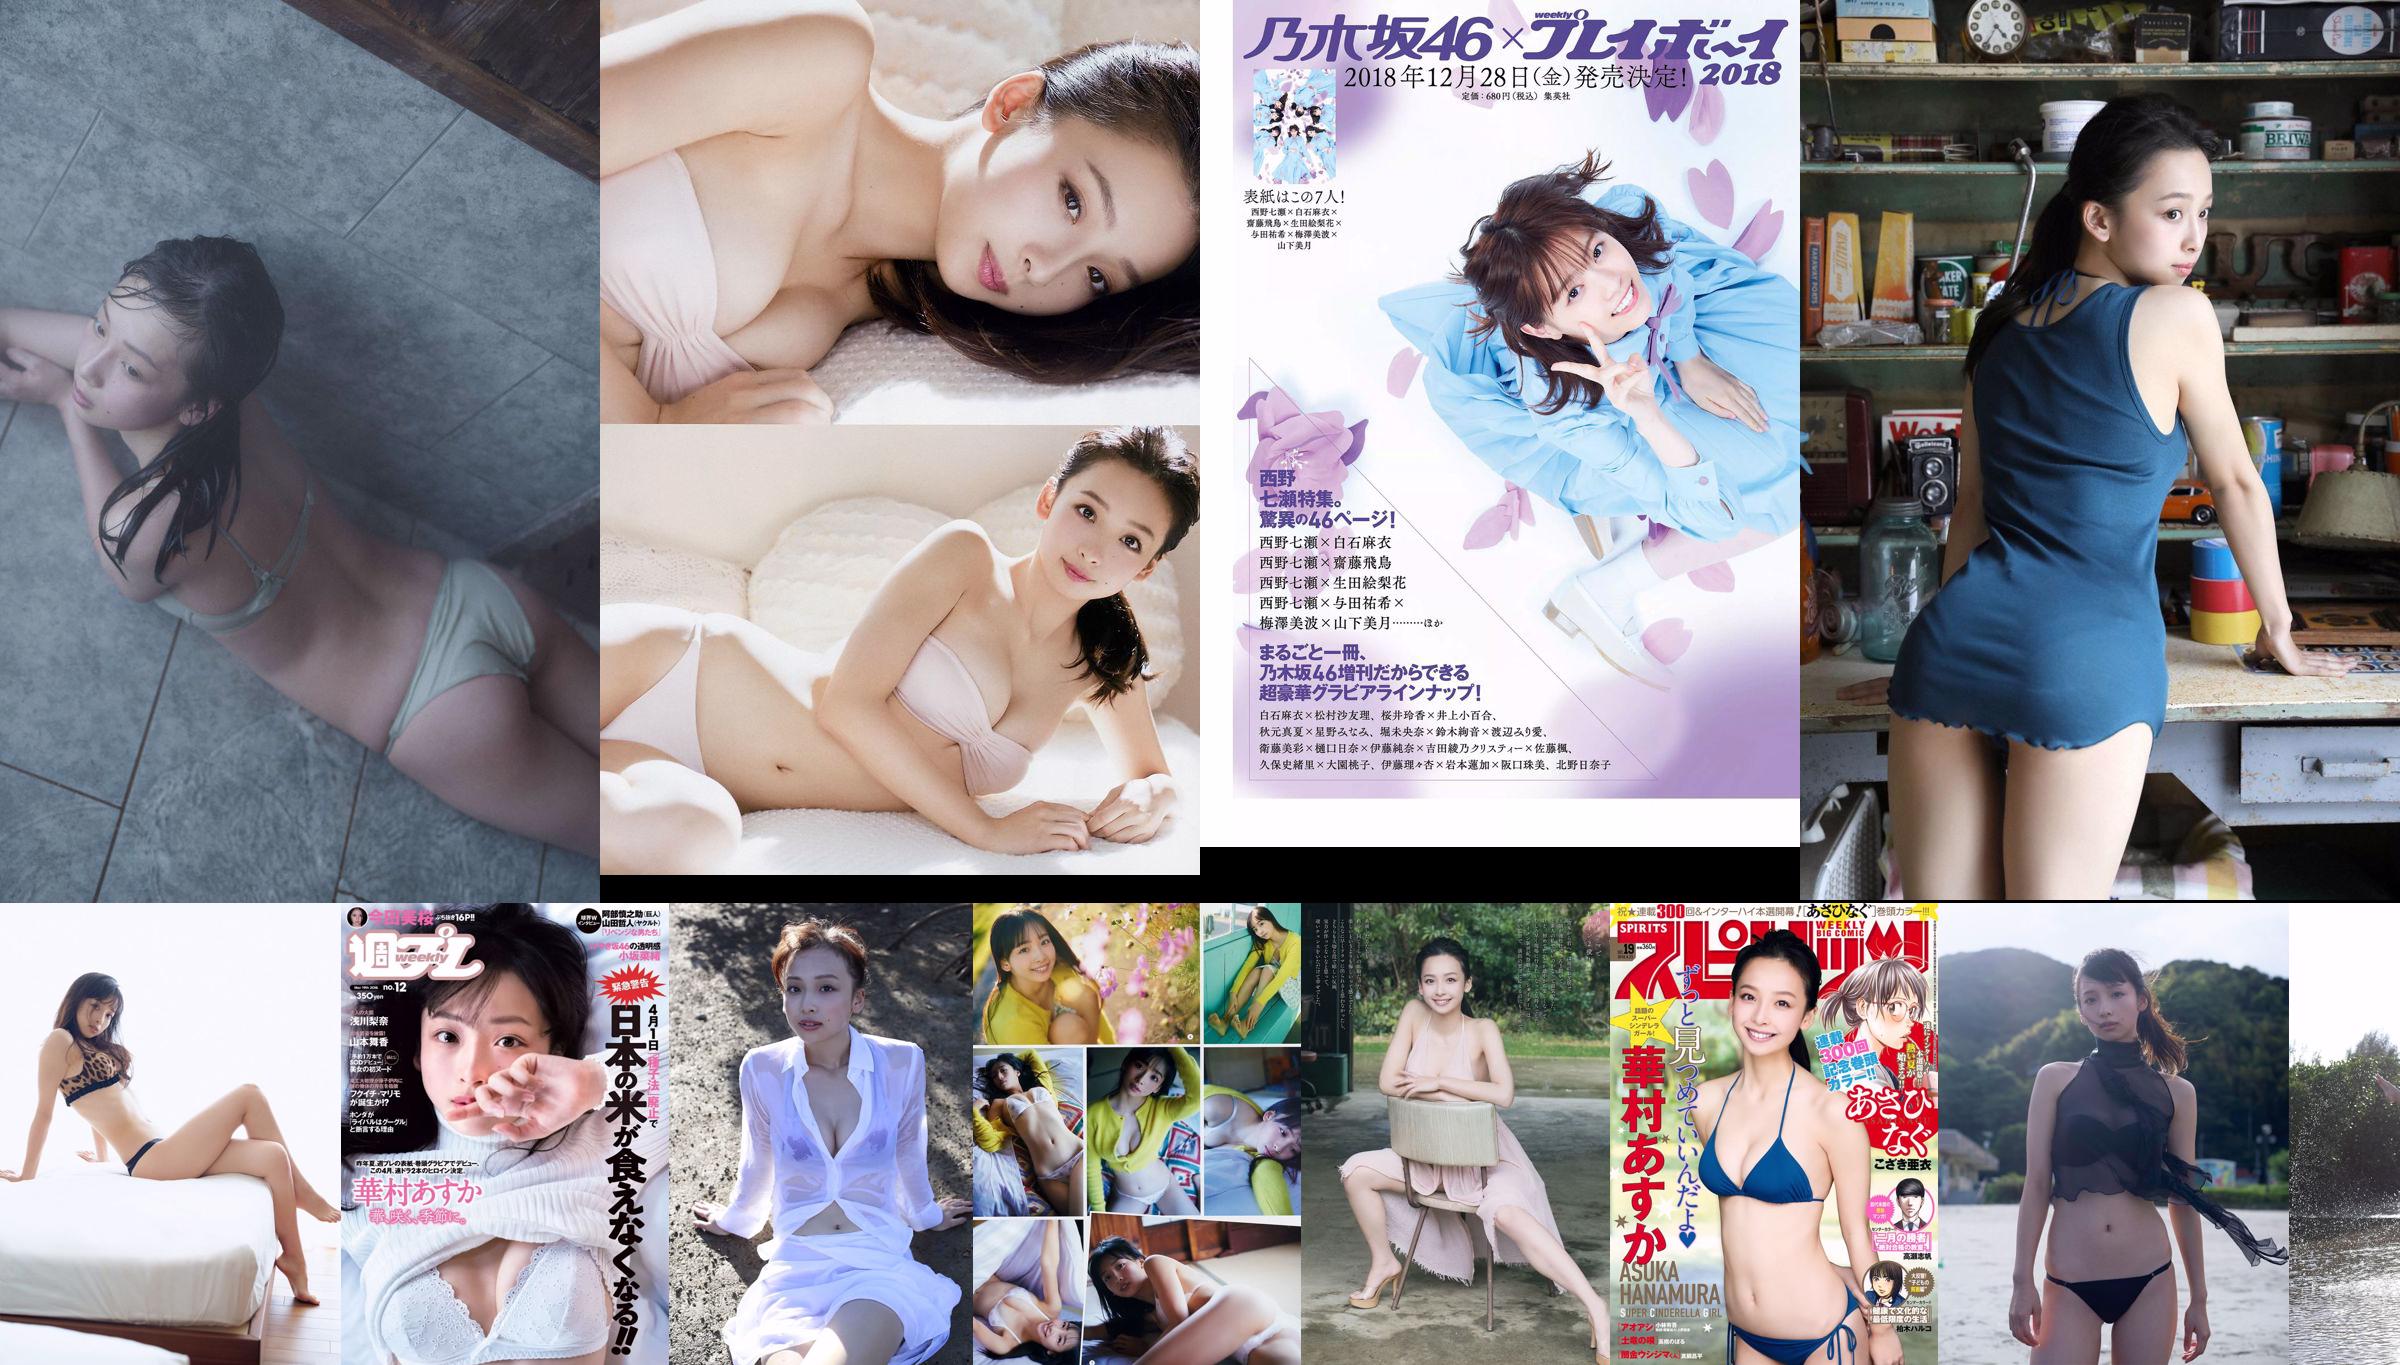 [FREITAG] Huacun Asuka "Dusche in einem leicht erwachsenen Bikini (mit Dongman)" Foto No.30e2c8 Seite 1